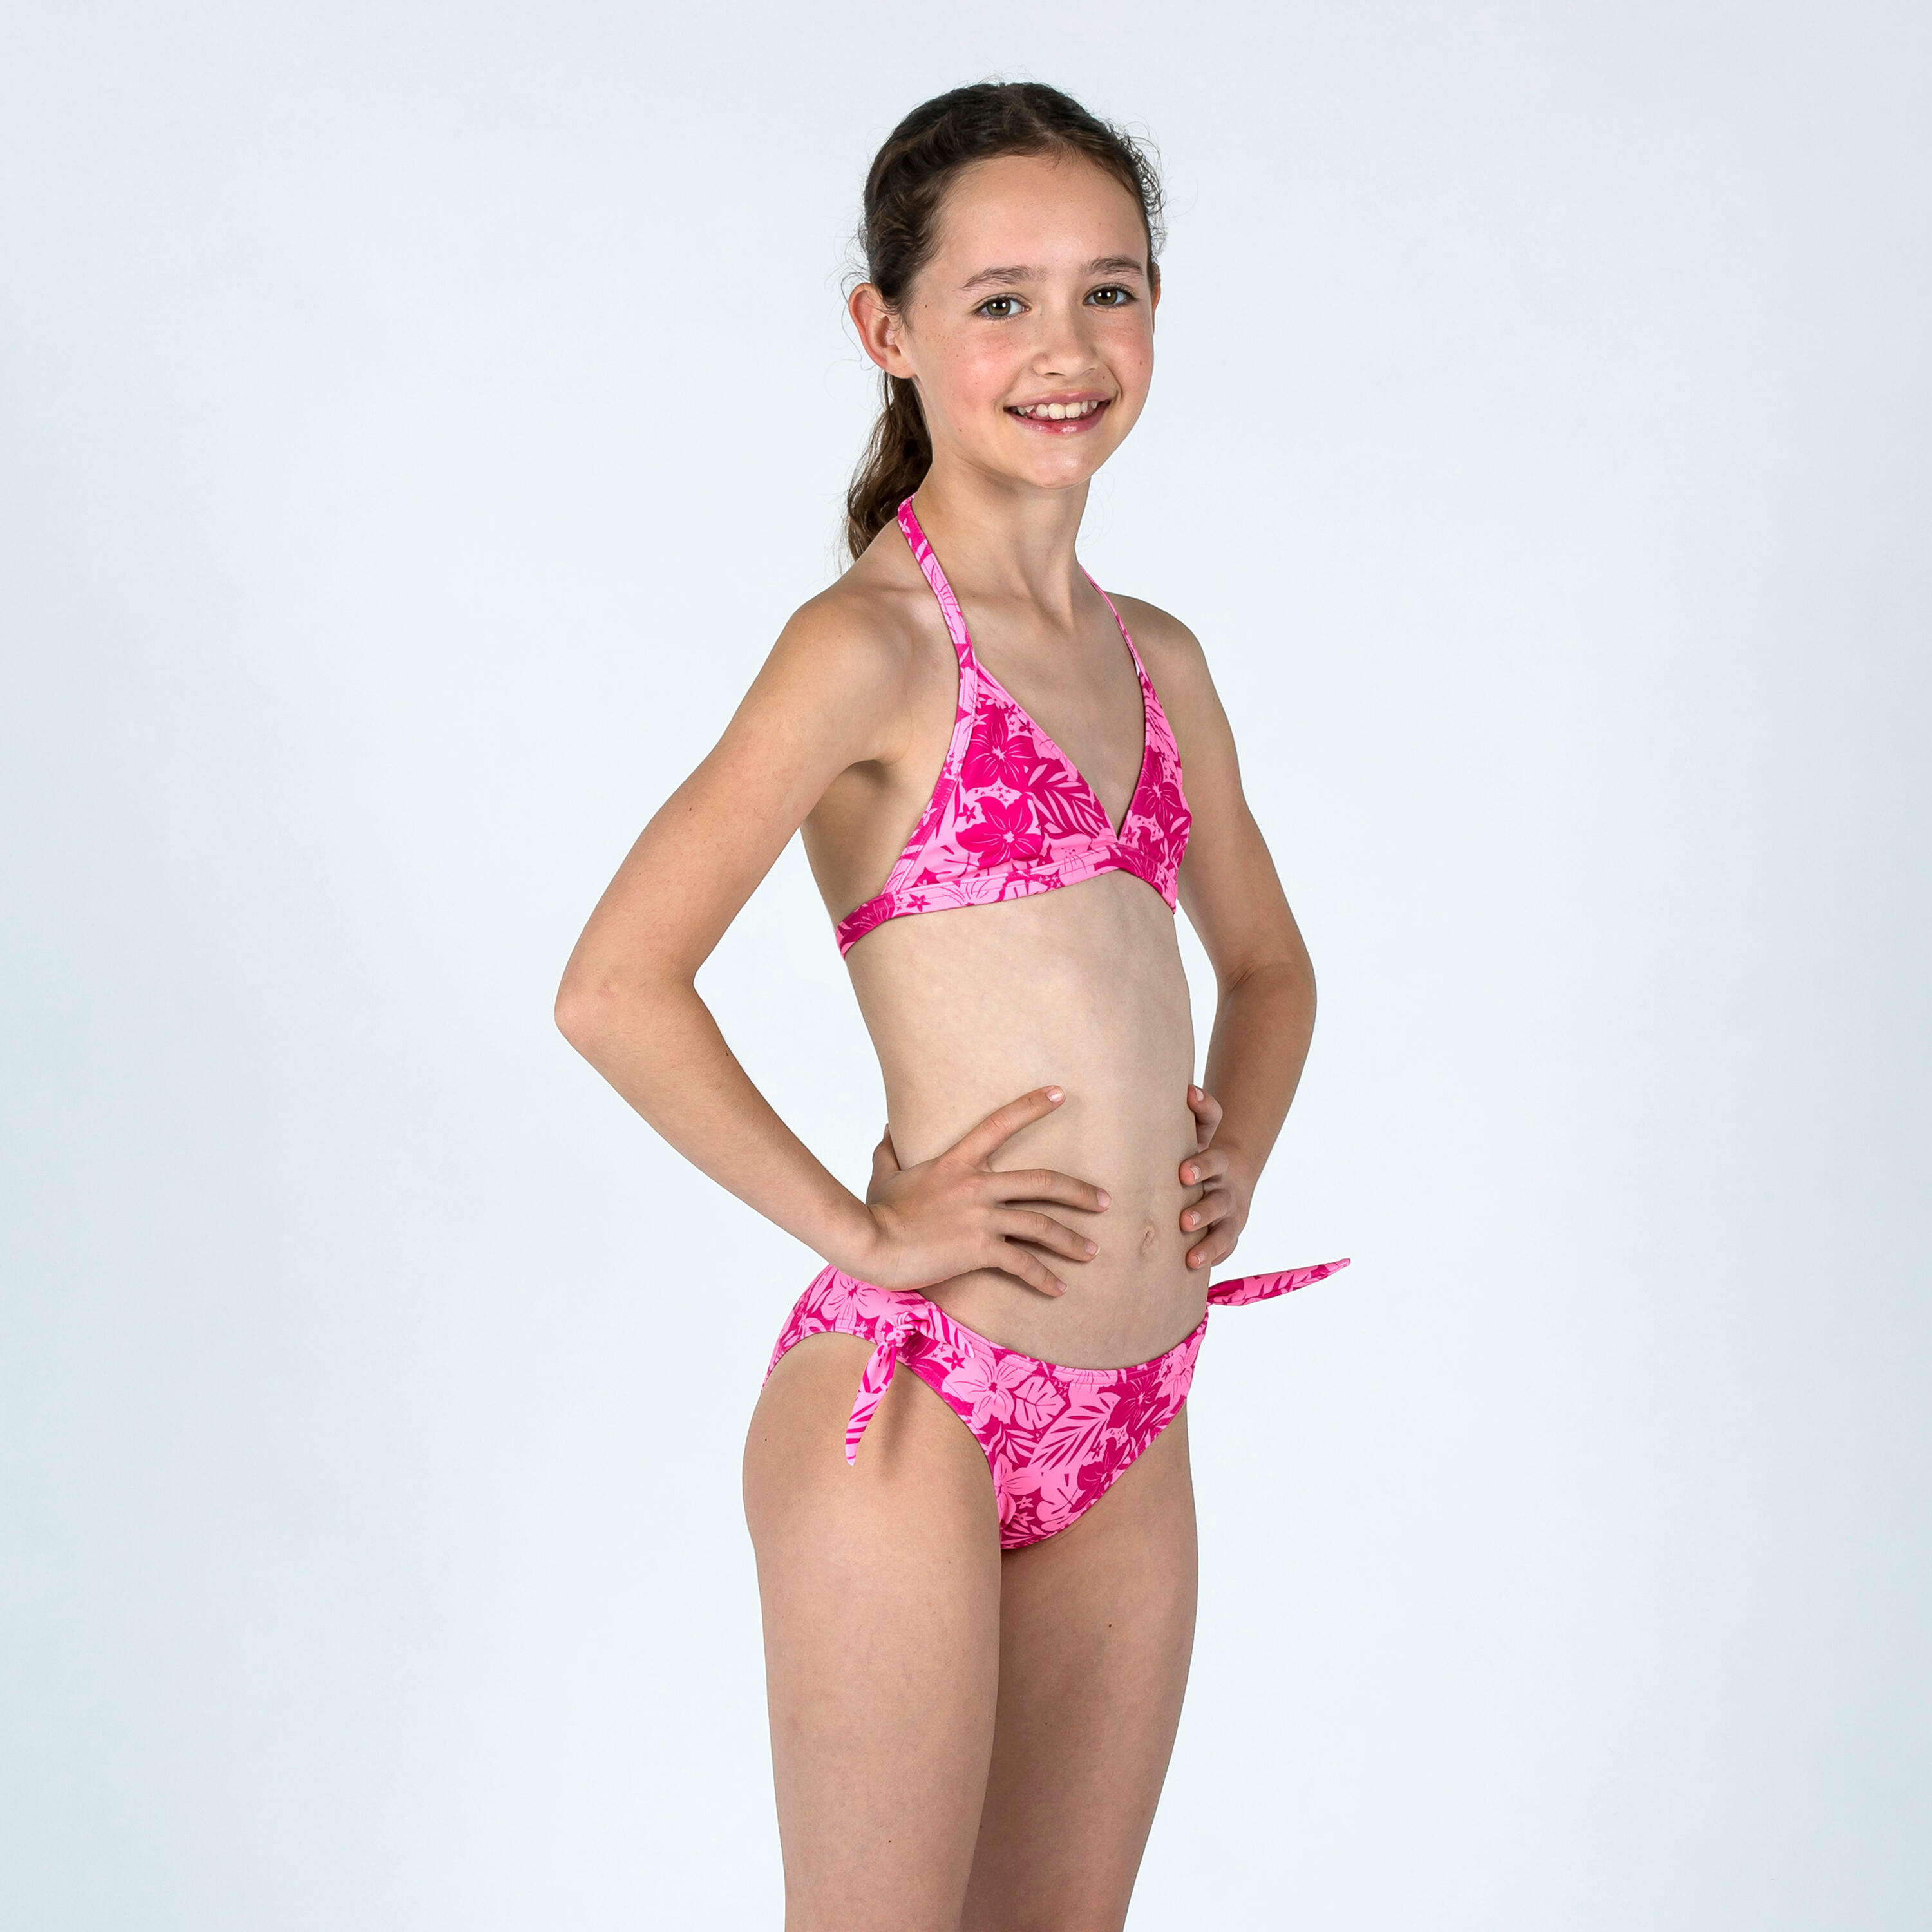 OLAIAN Bikini-Set Mädchen - 100 Tania Tropical rosa Gr. 140 - 10 Jahre